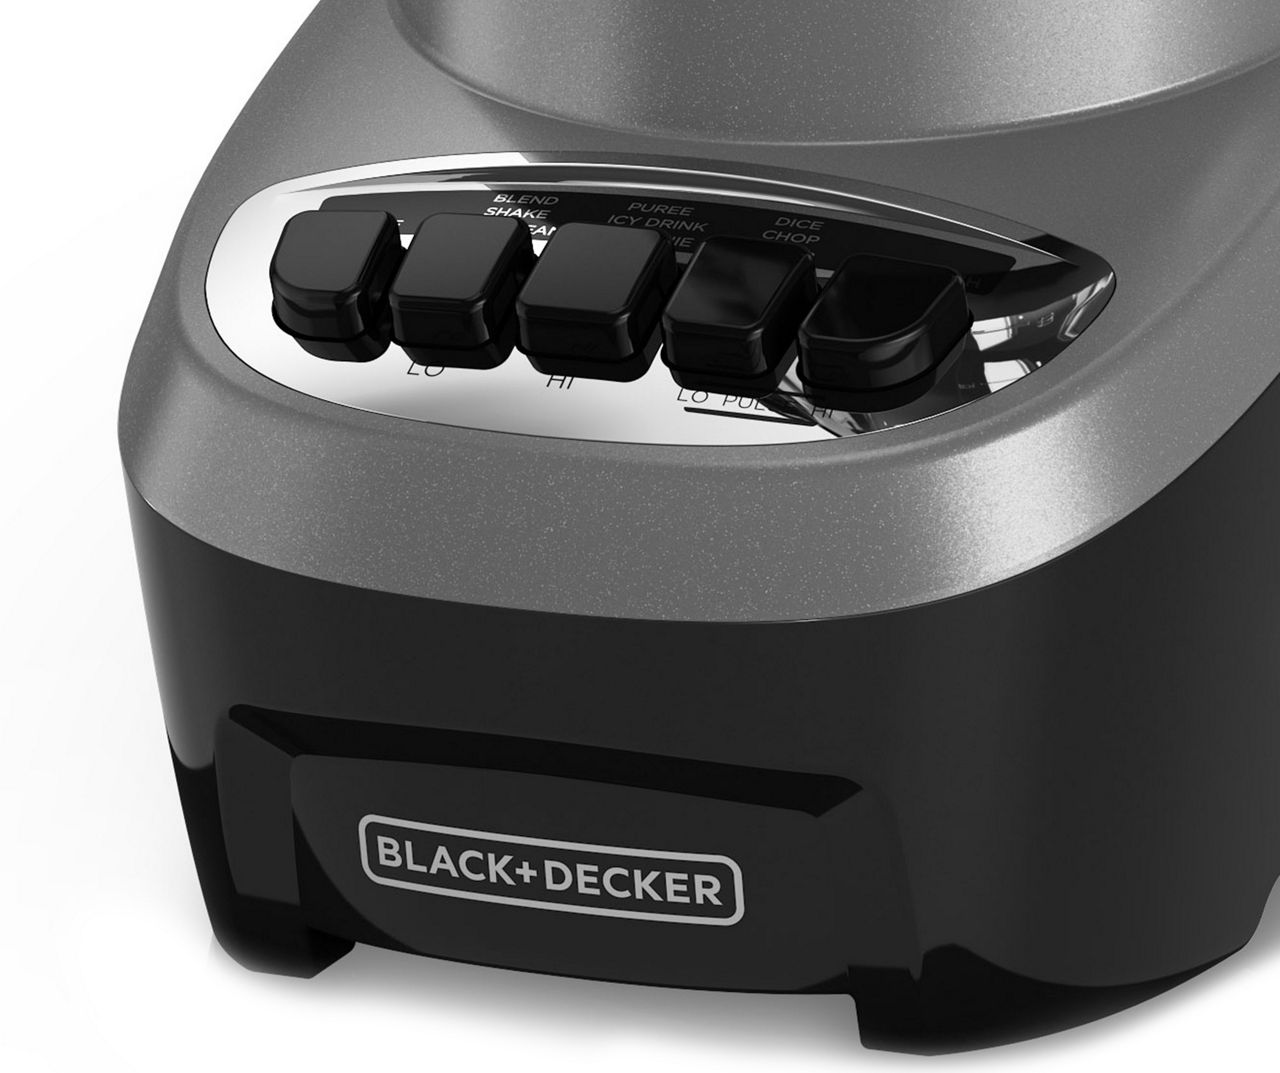  BLACK+DECKER Counter Top Blender, Black, BL1210BG: Home &  Kitchen